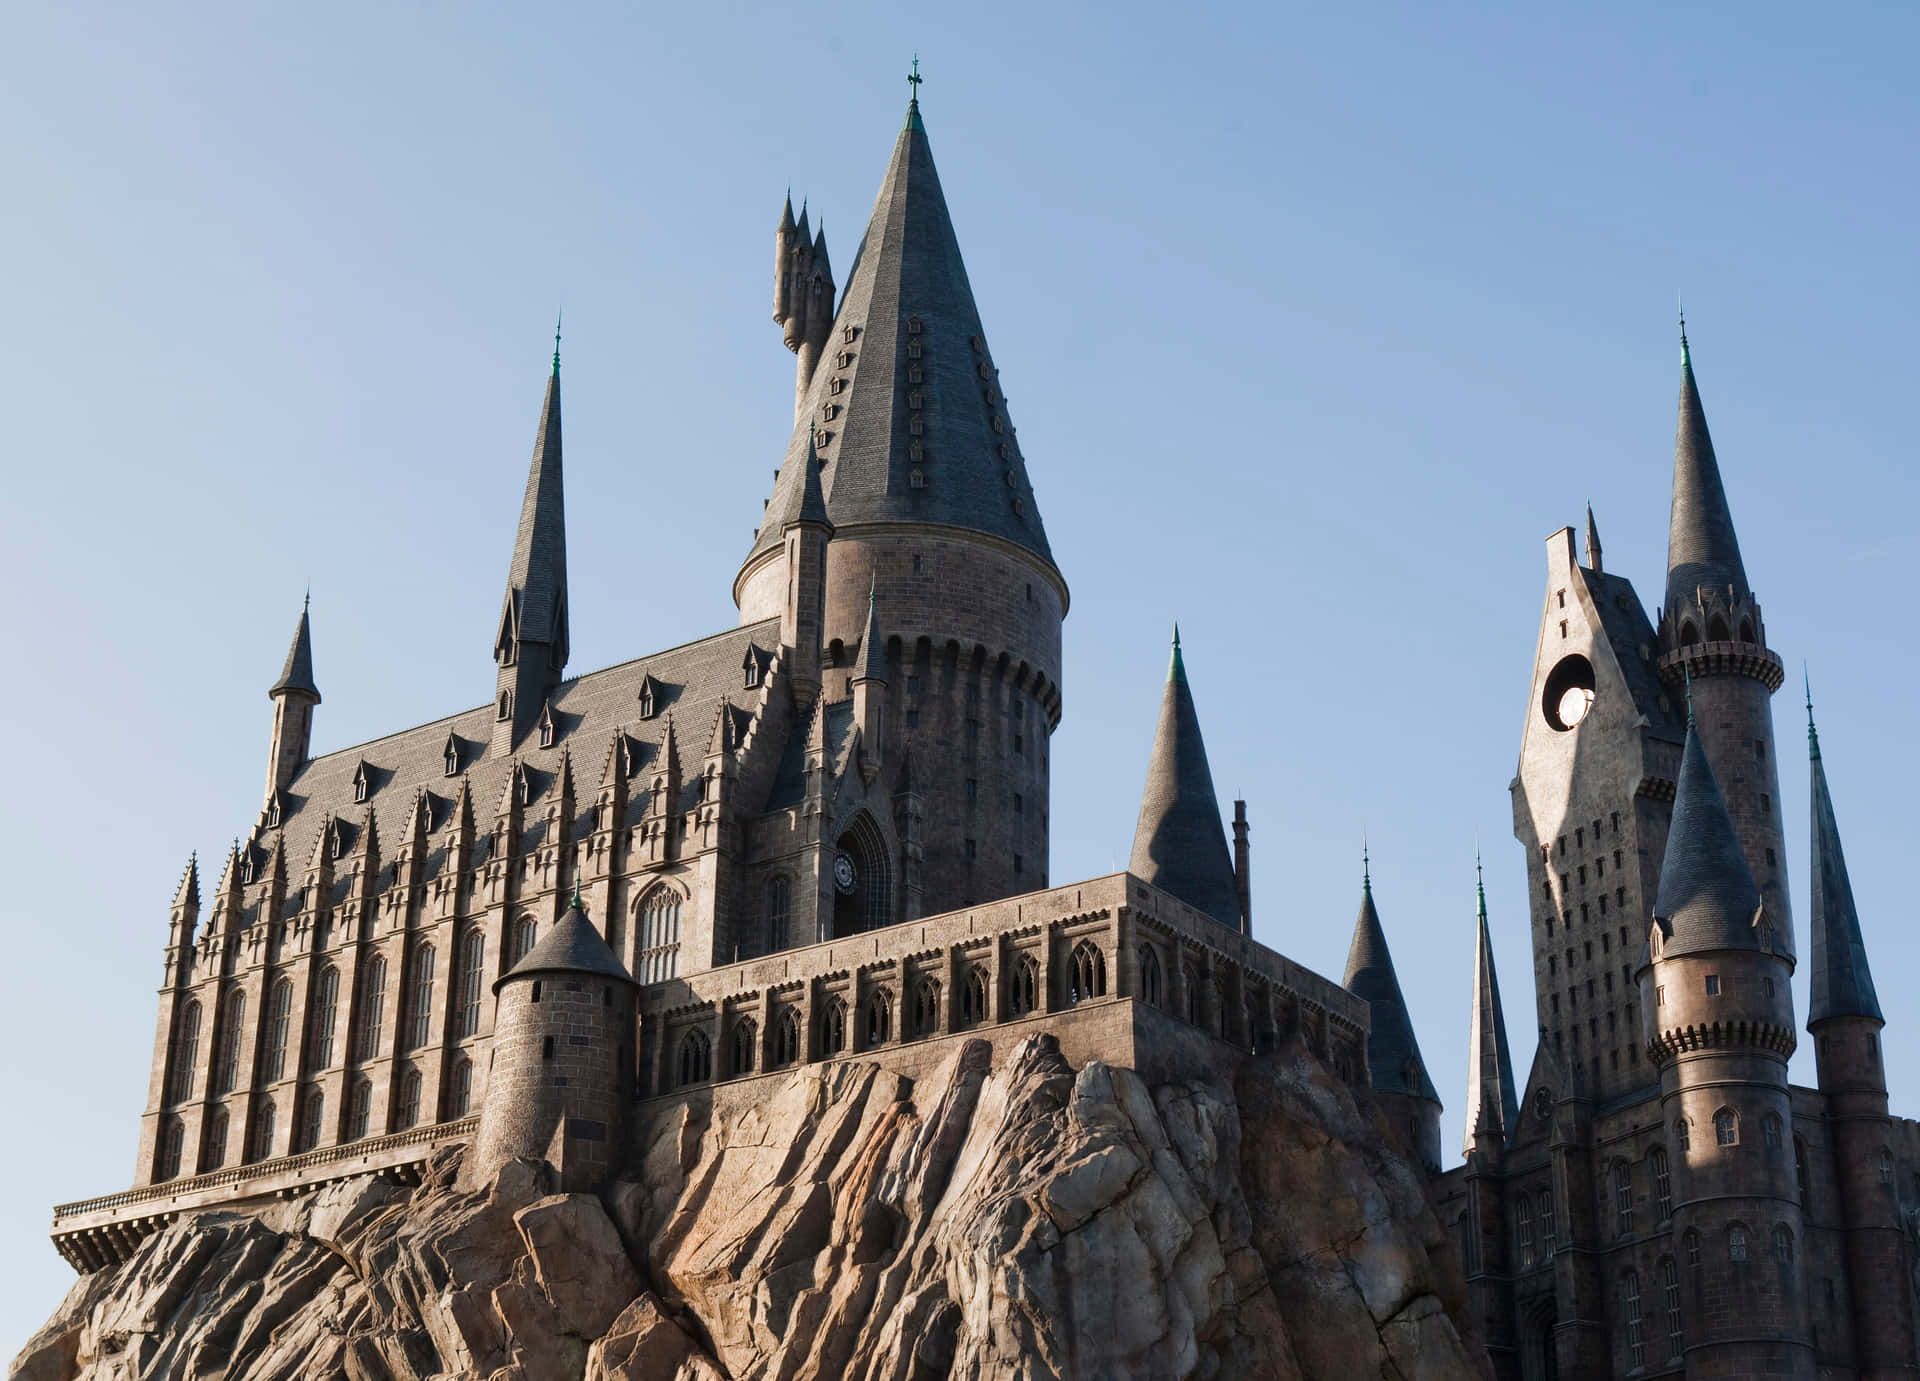 The Magical World of Hogwarts